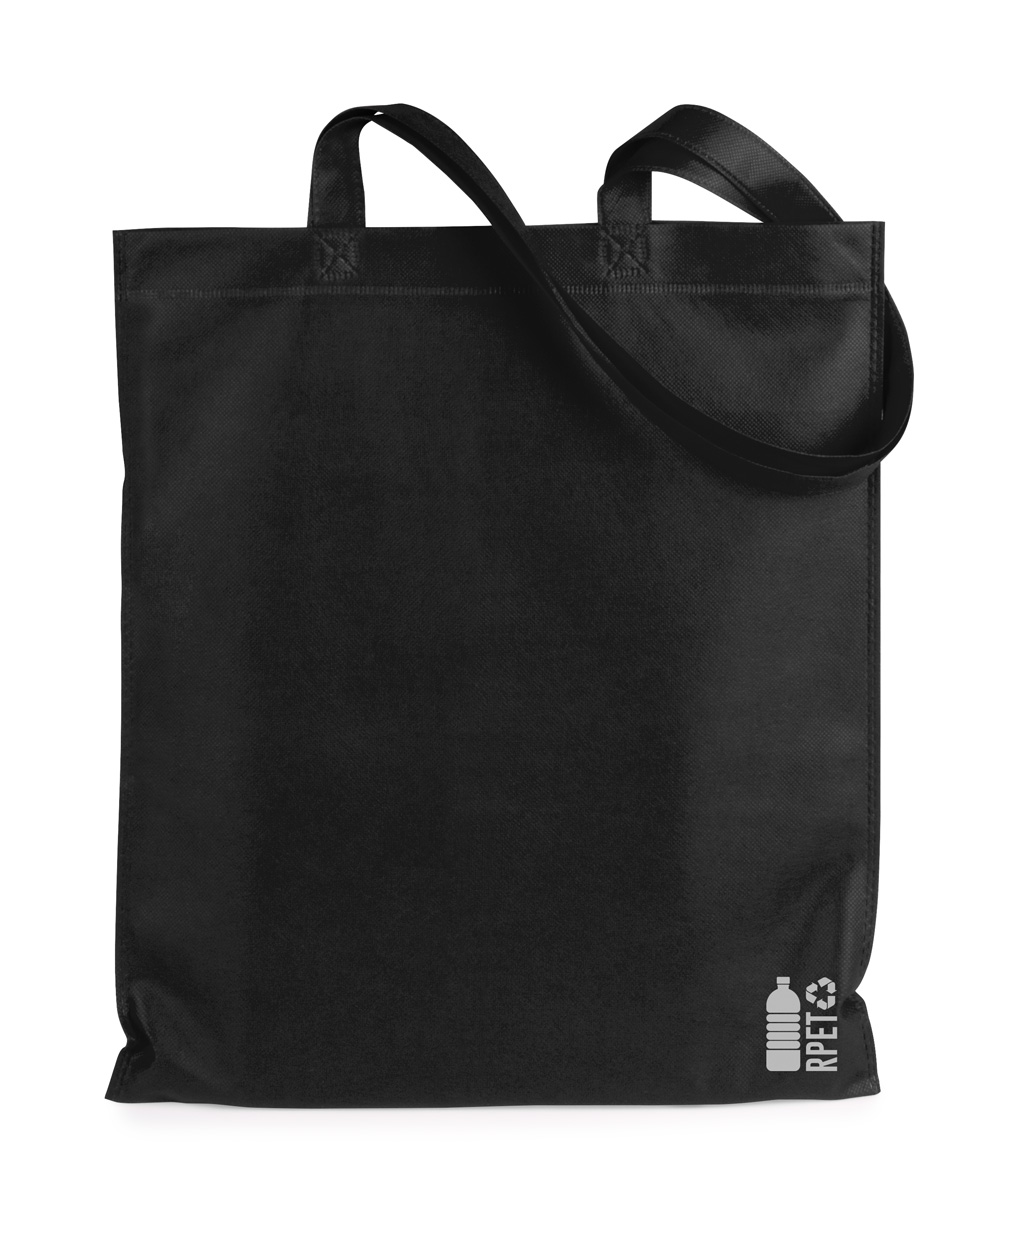 Rezzin RPET shopping bag - black